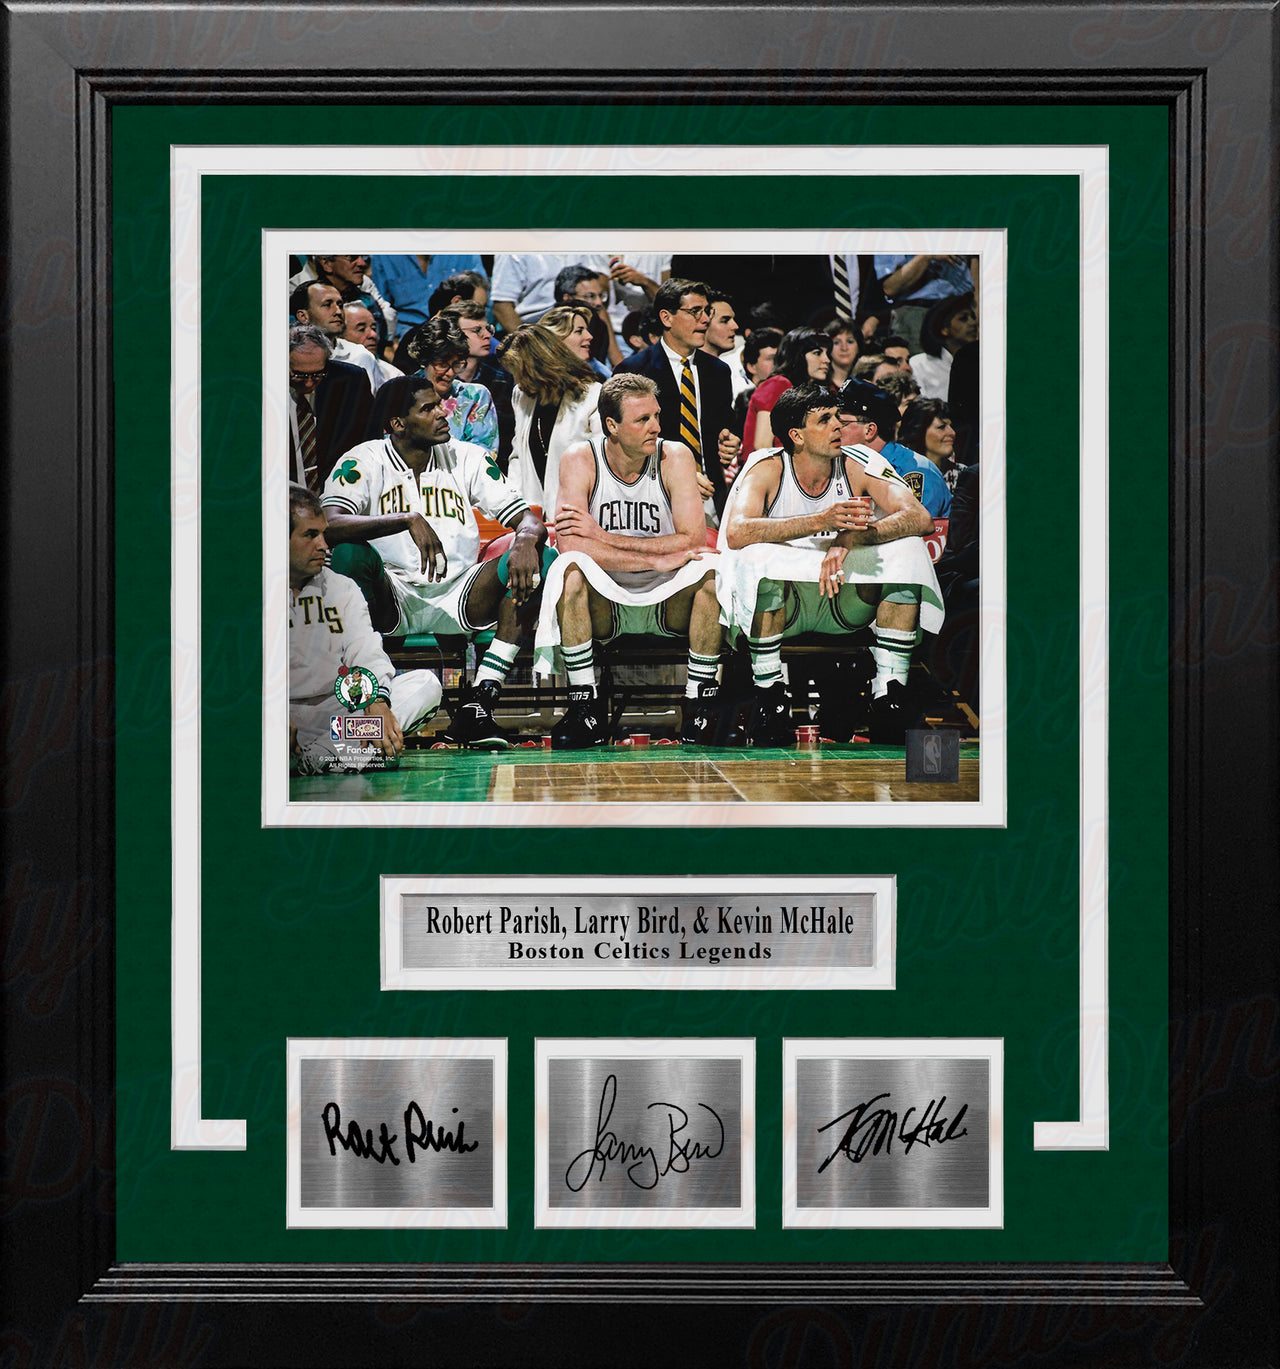 Robert Parish, Larry Bird & Kevin McHale Boston Celtics 8x10 Framed Photo with Engraved Autographs